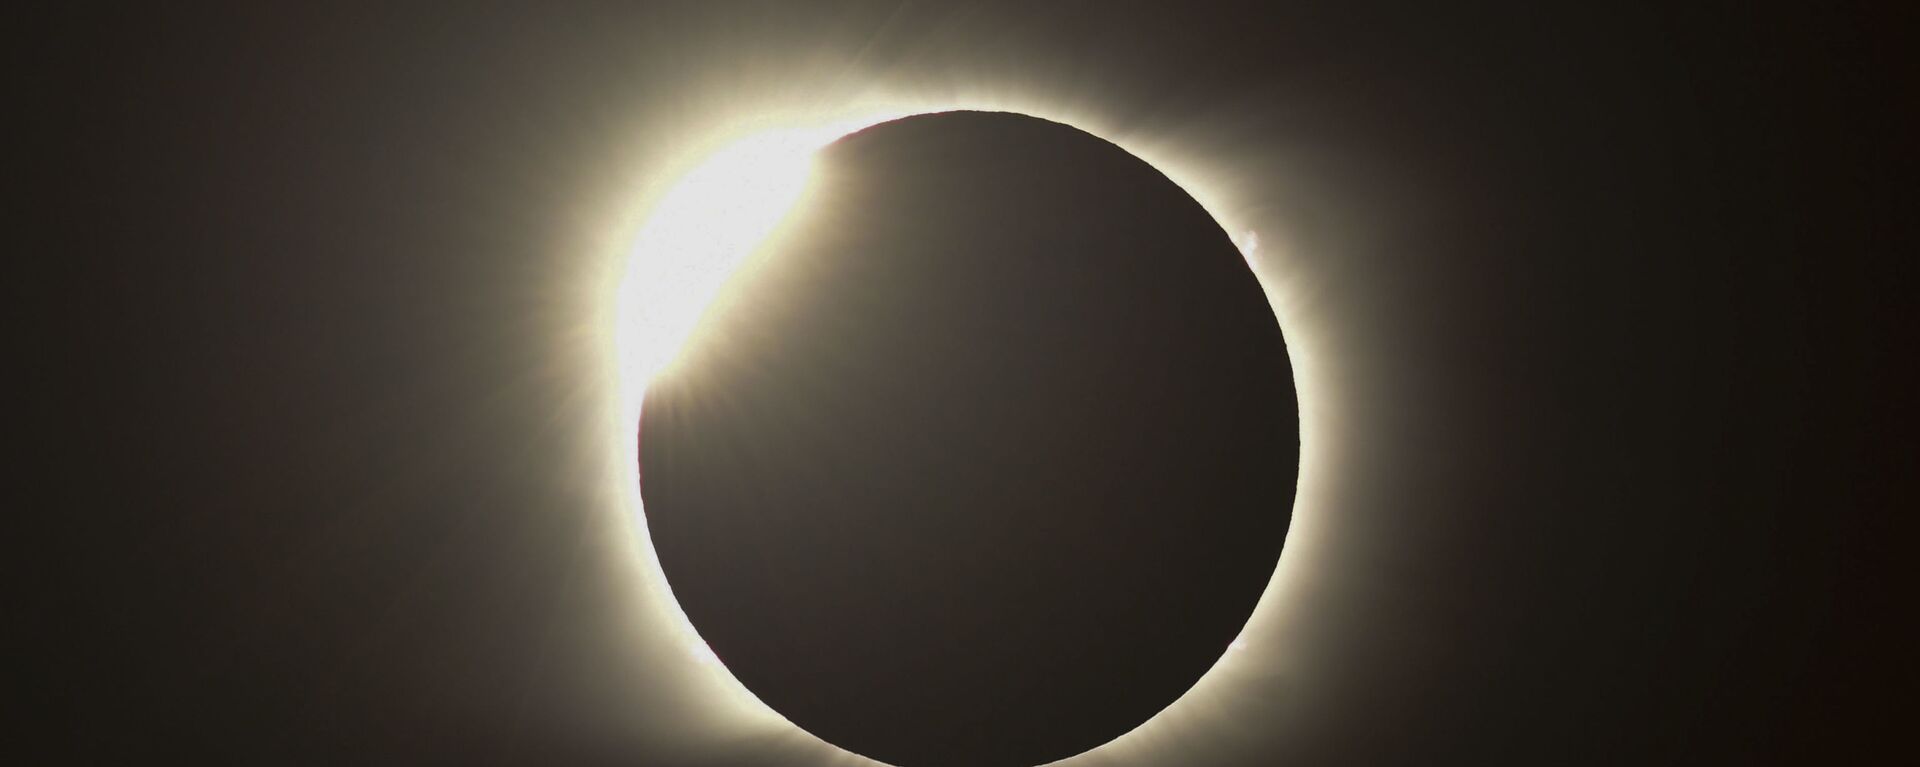 Un eclipse solar (foto referencial) - Sputnik Mundo, 1920, 07.01.2021